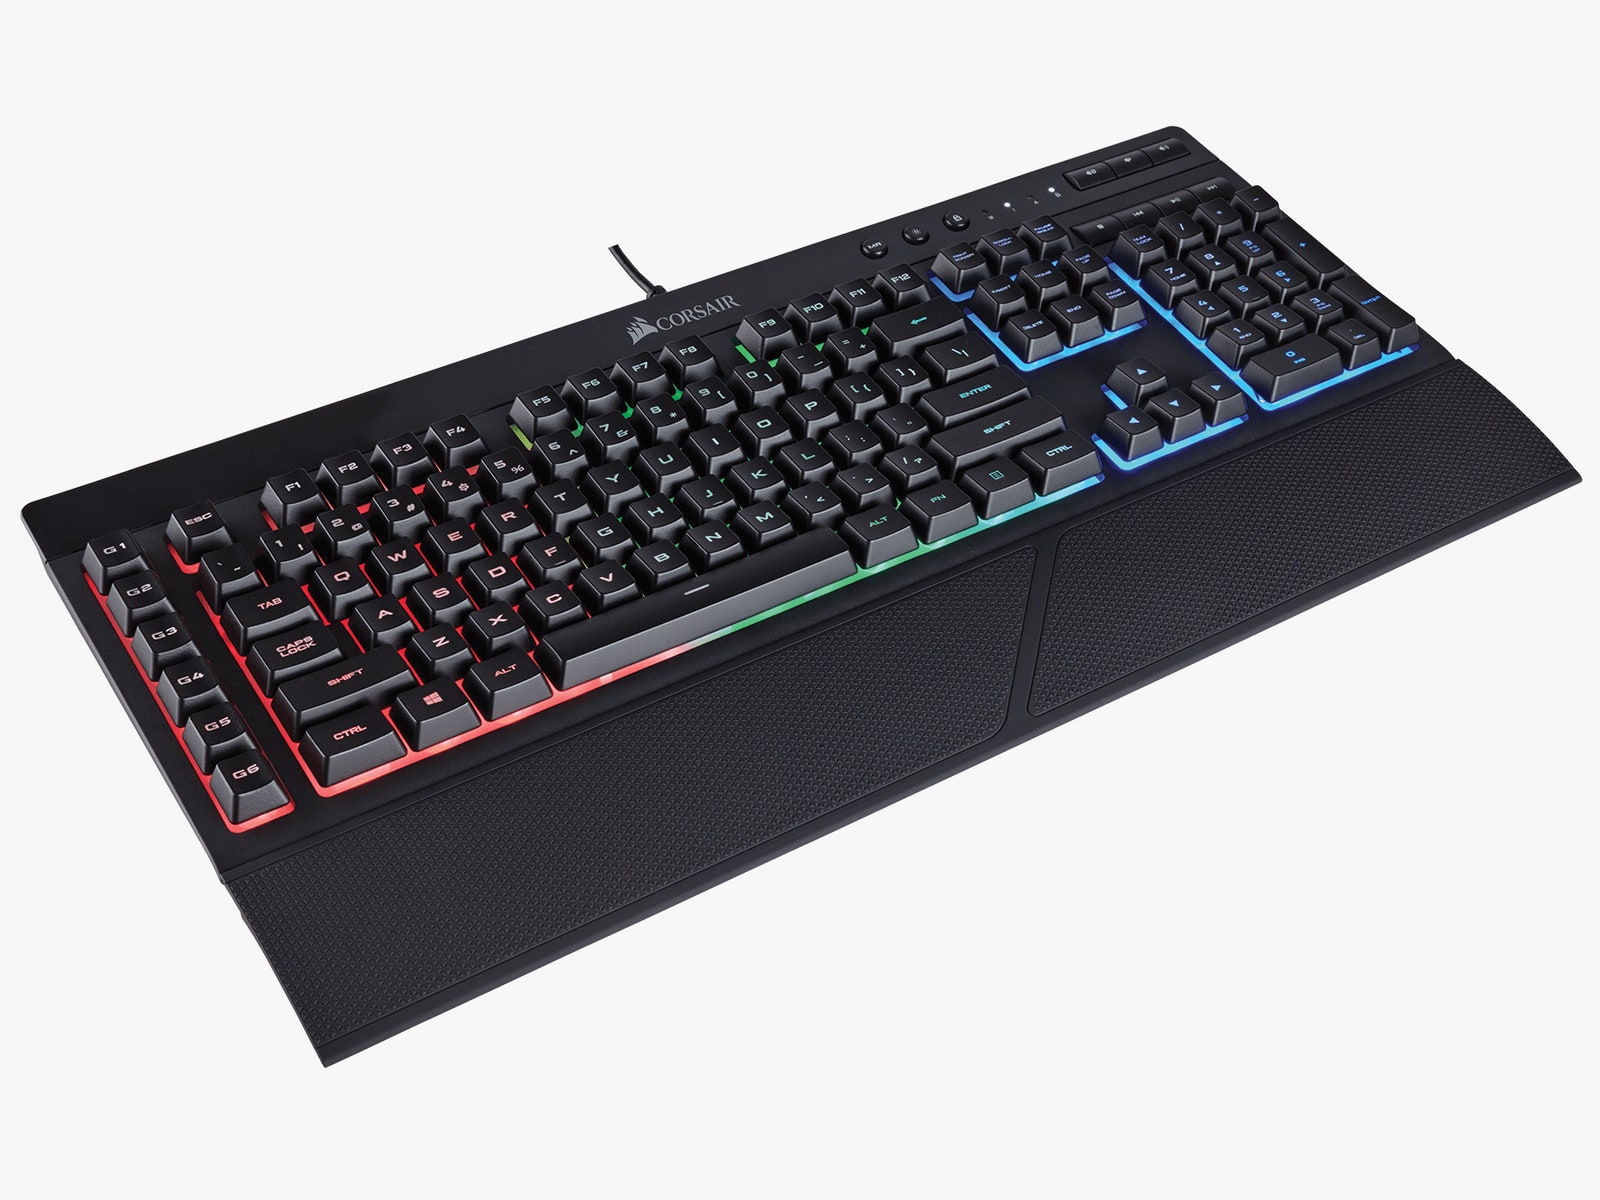 Corsair K55 gaming keyboard